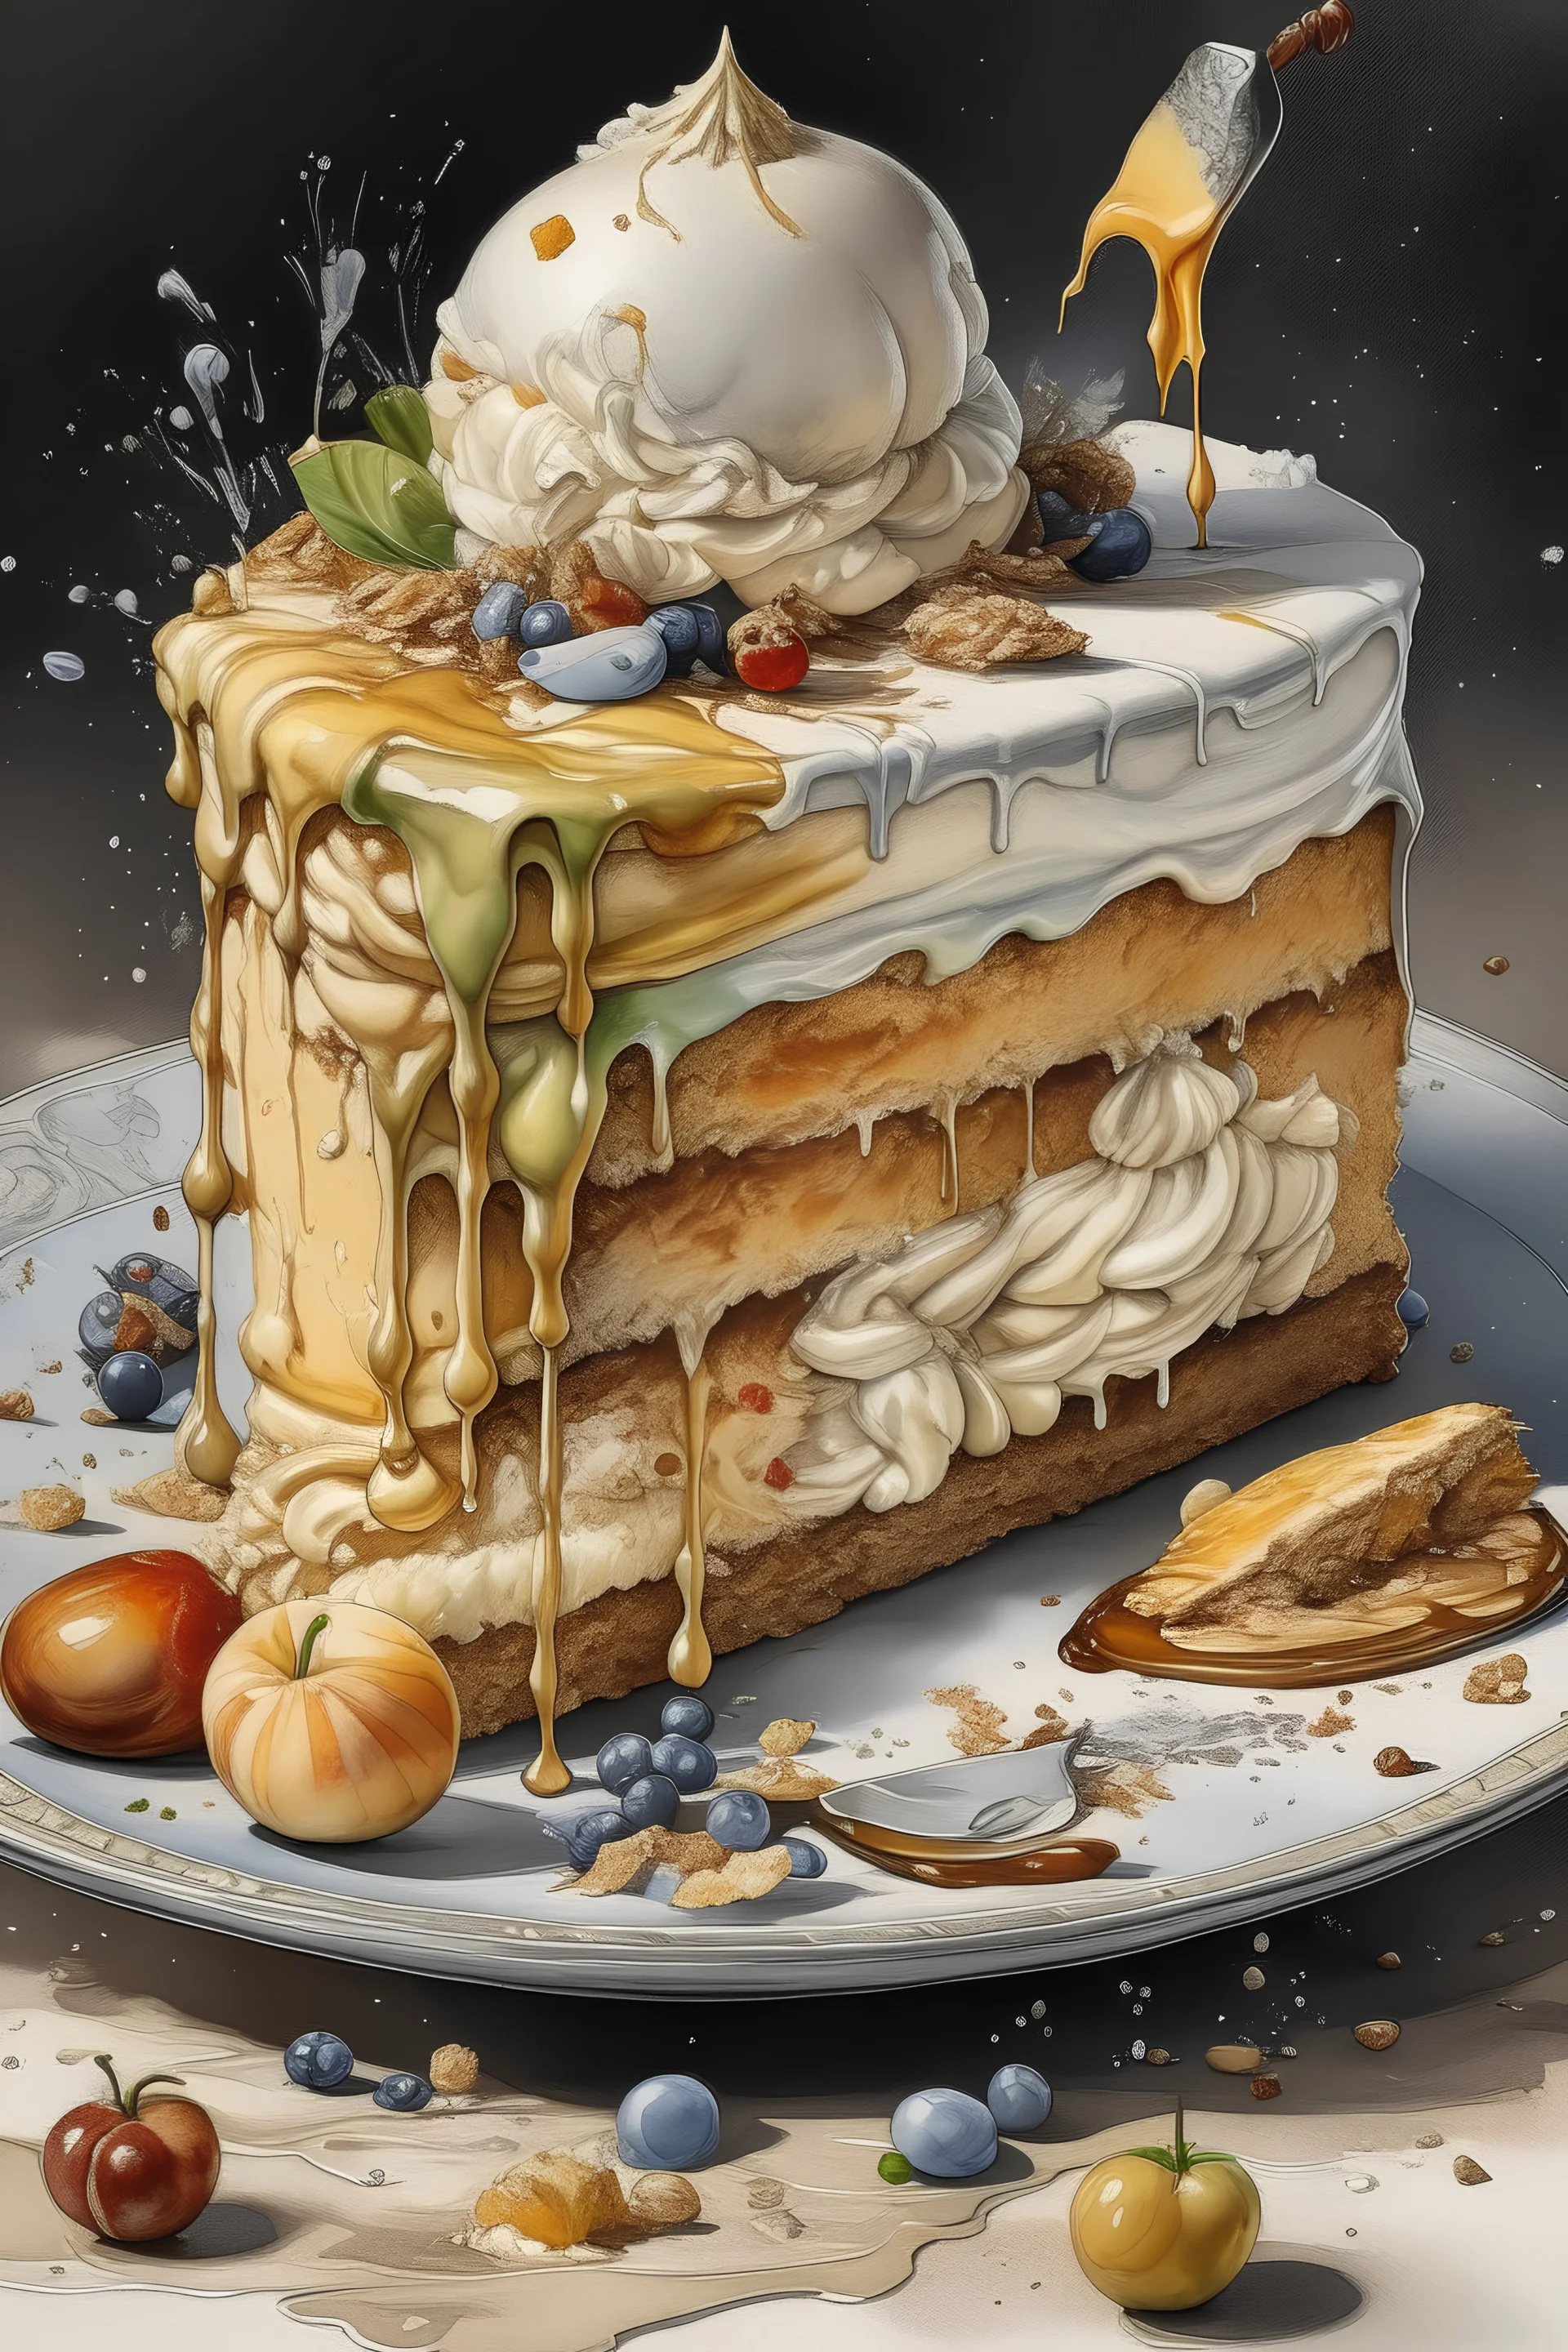 creamcake with icecream, Watercolor, trending on artstation, sharp focus, studio photo, intricate details, highly detailed, by greg rutkowski